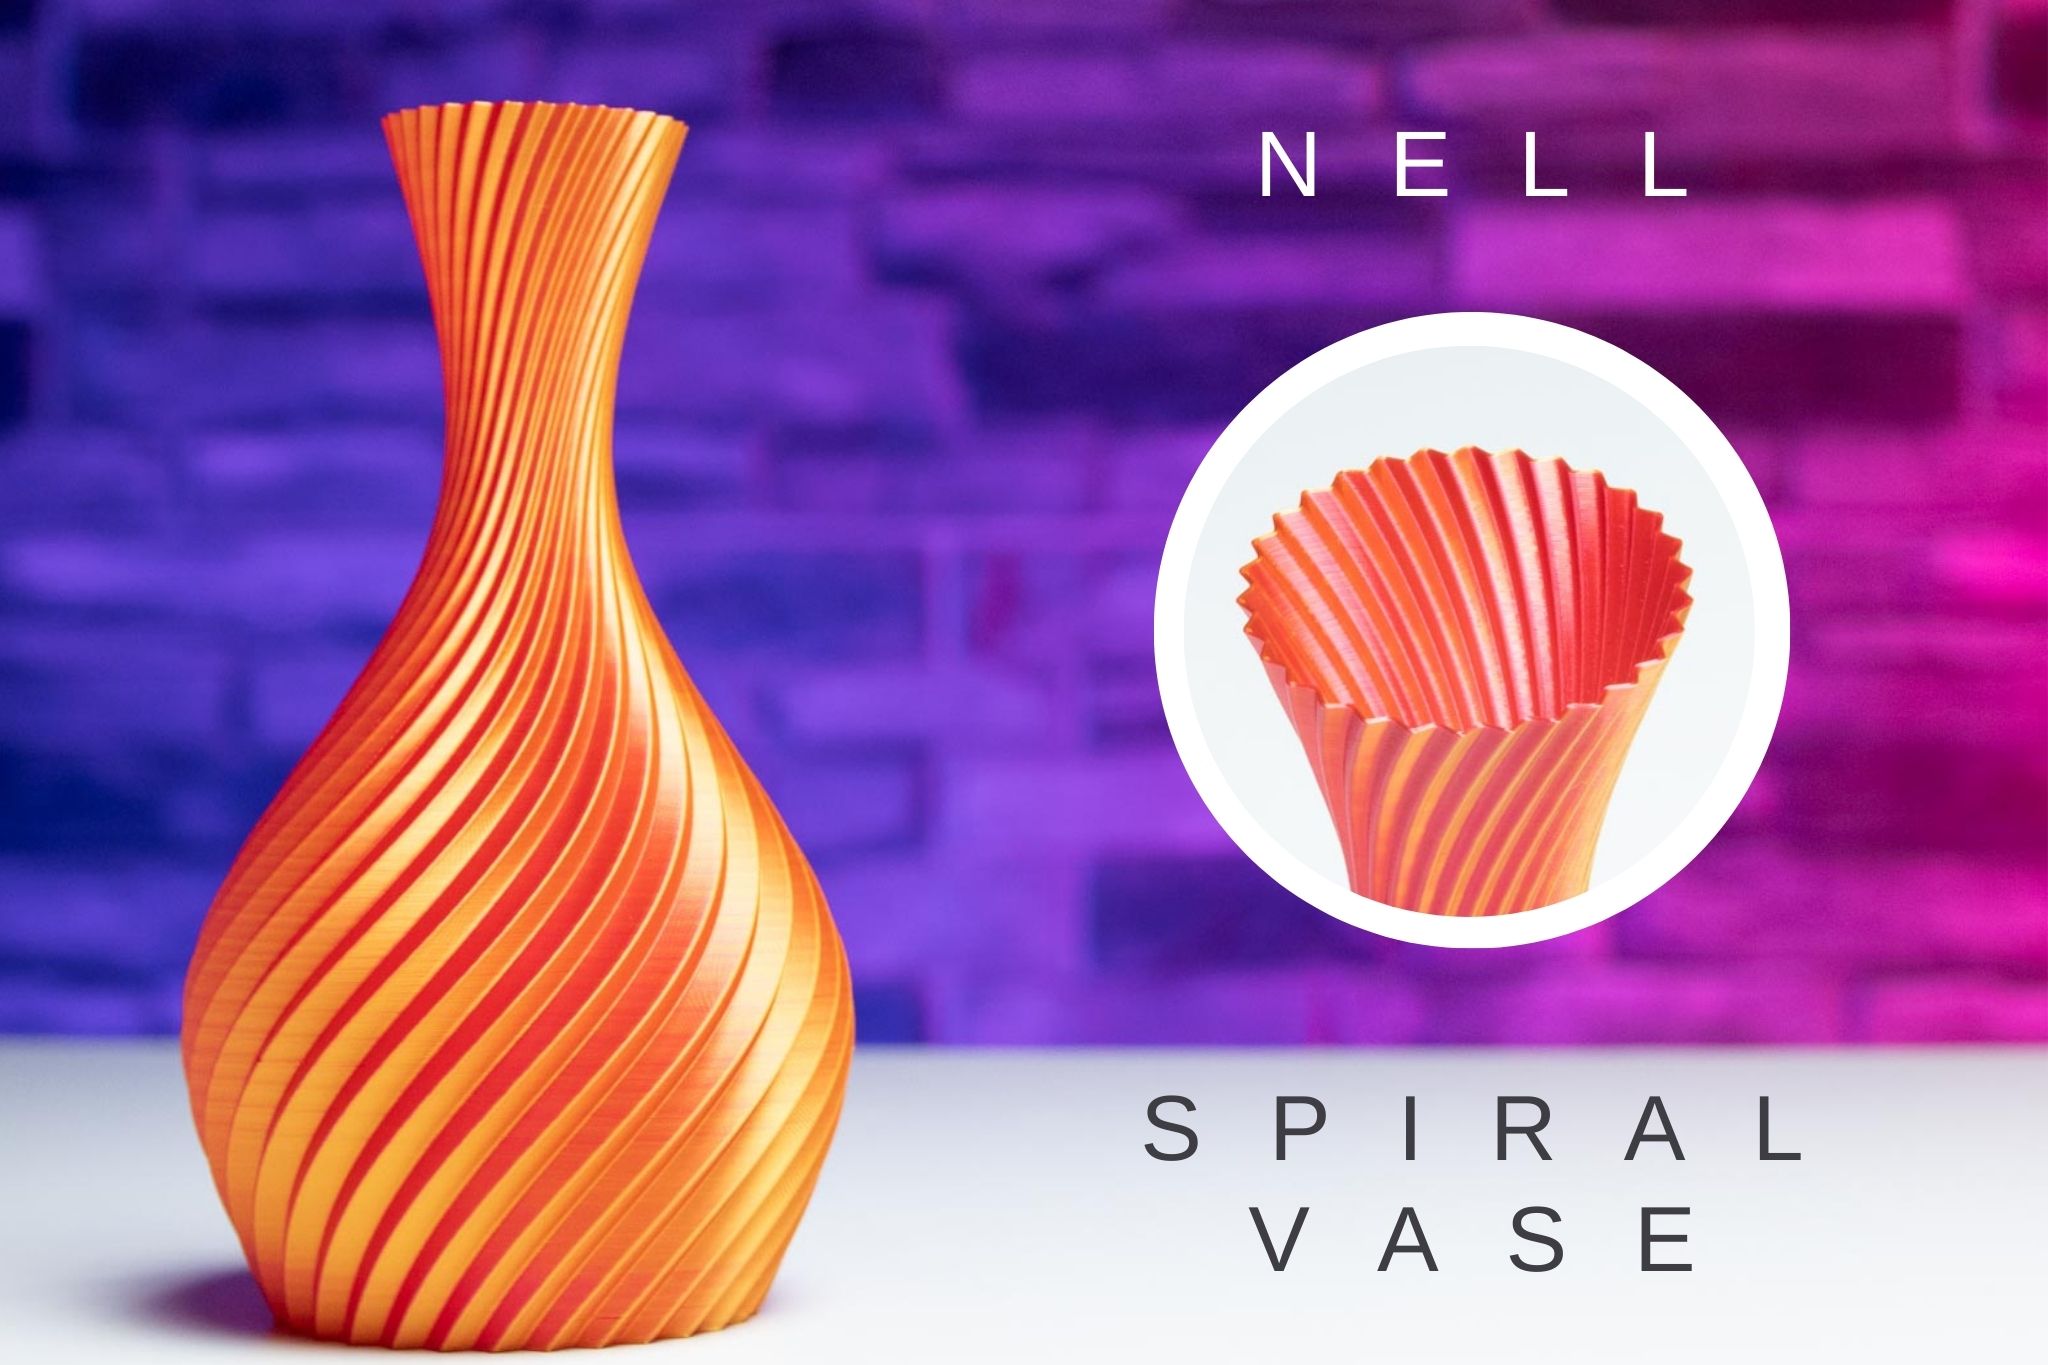 3D Printed Spiral Vase NELL